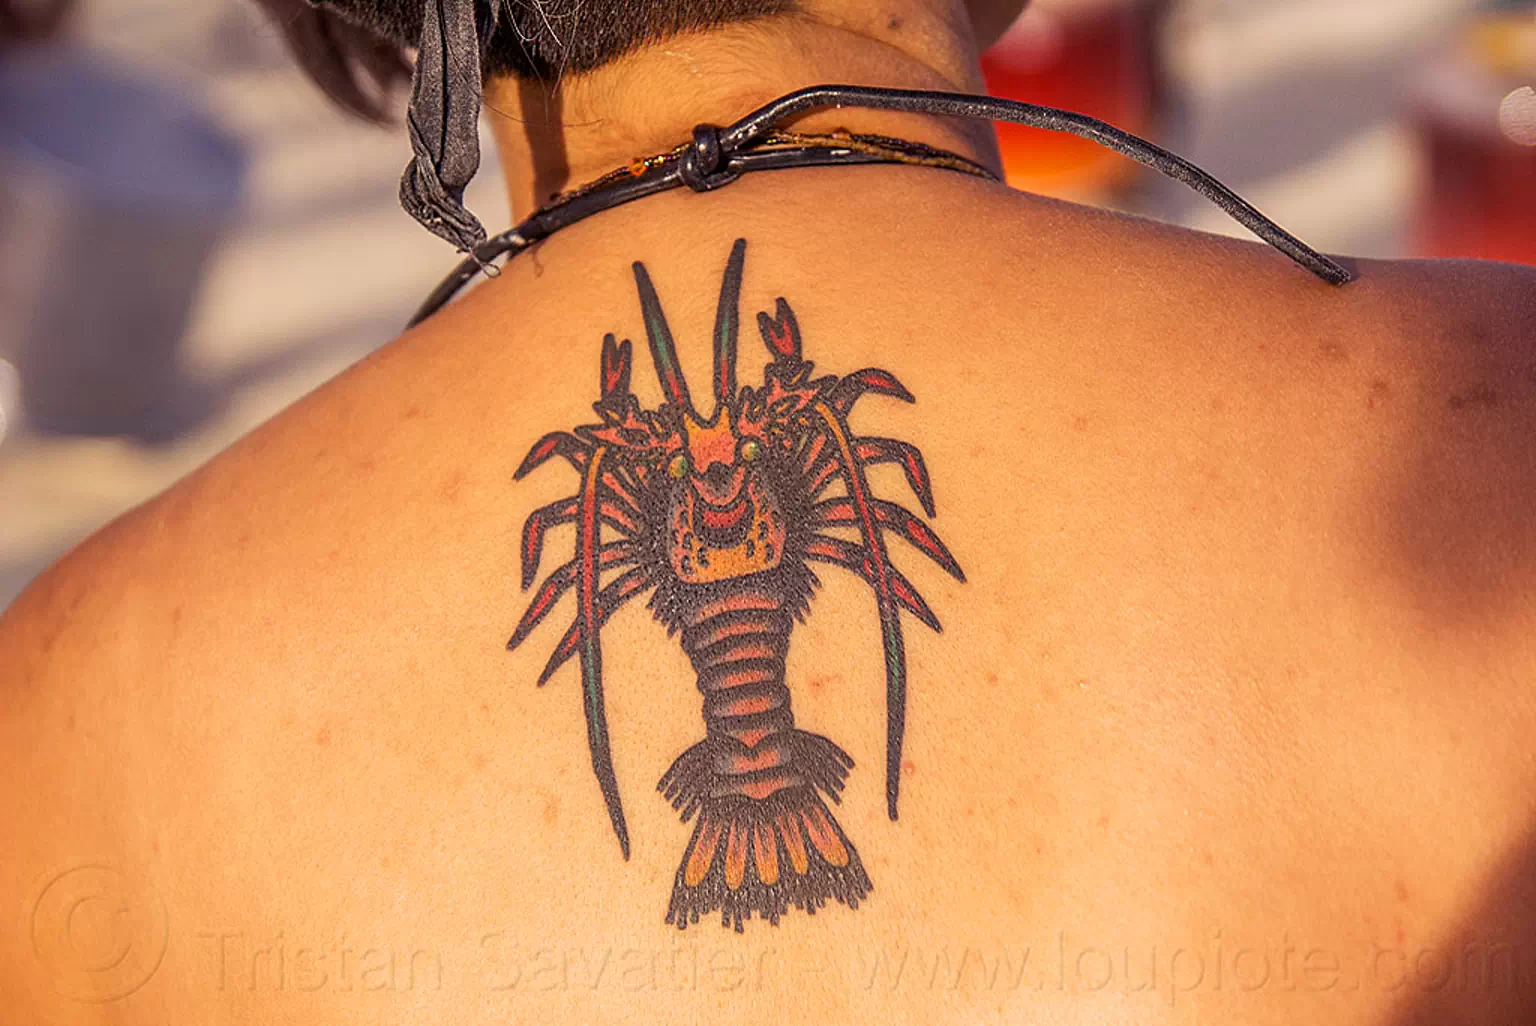 Lobster tattoo by wanderingstreet on DeviantArt